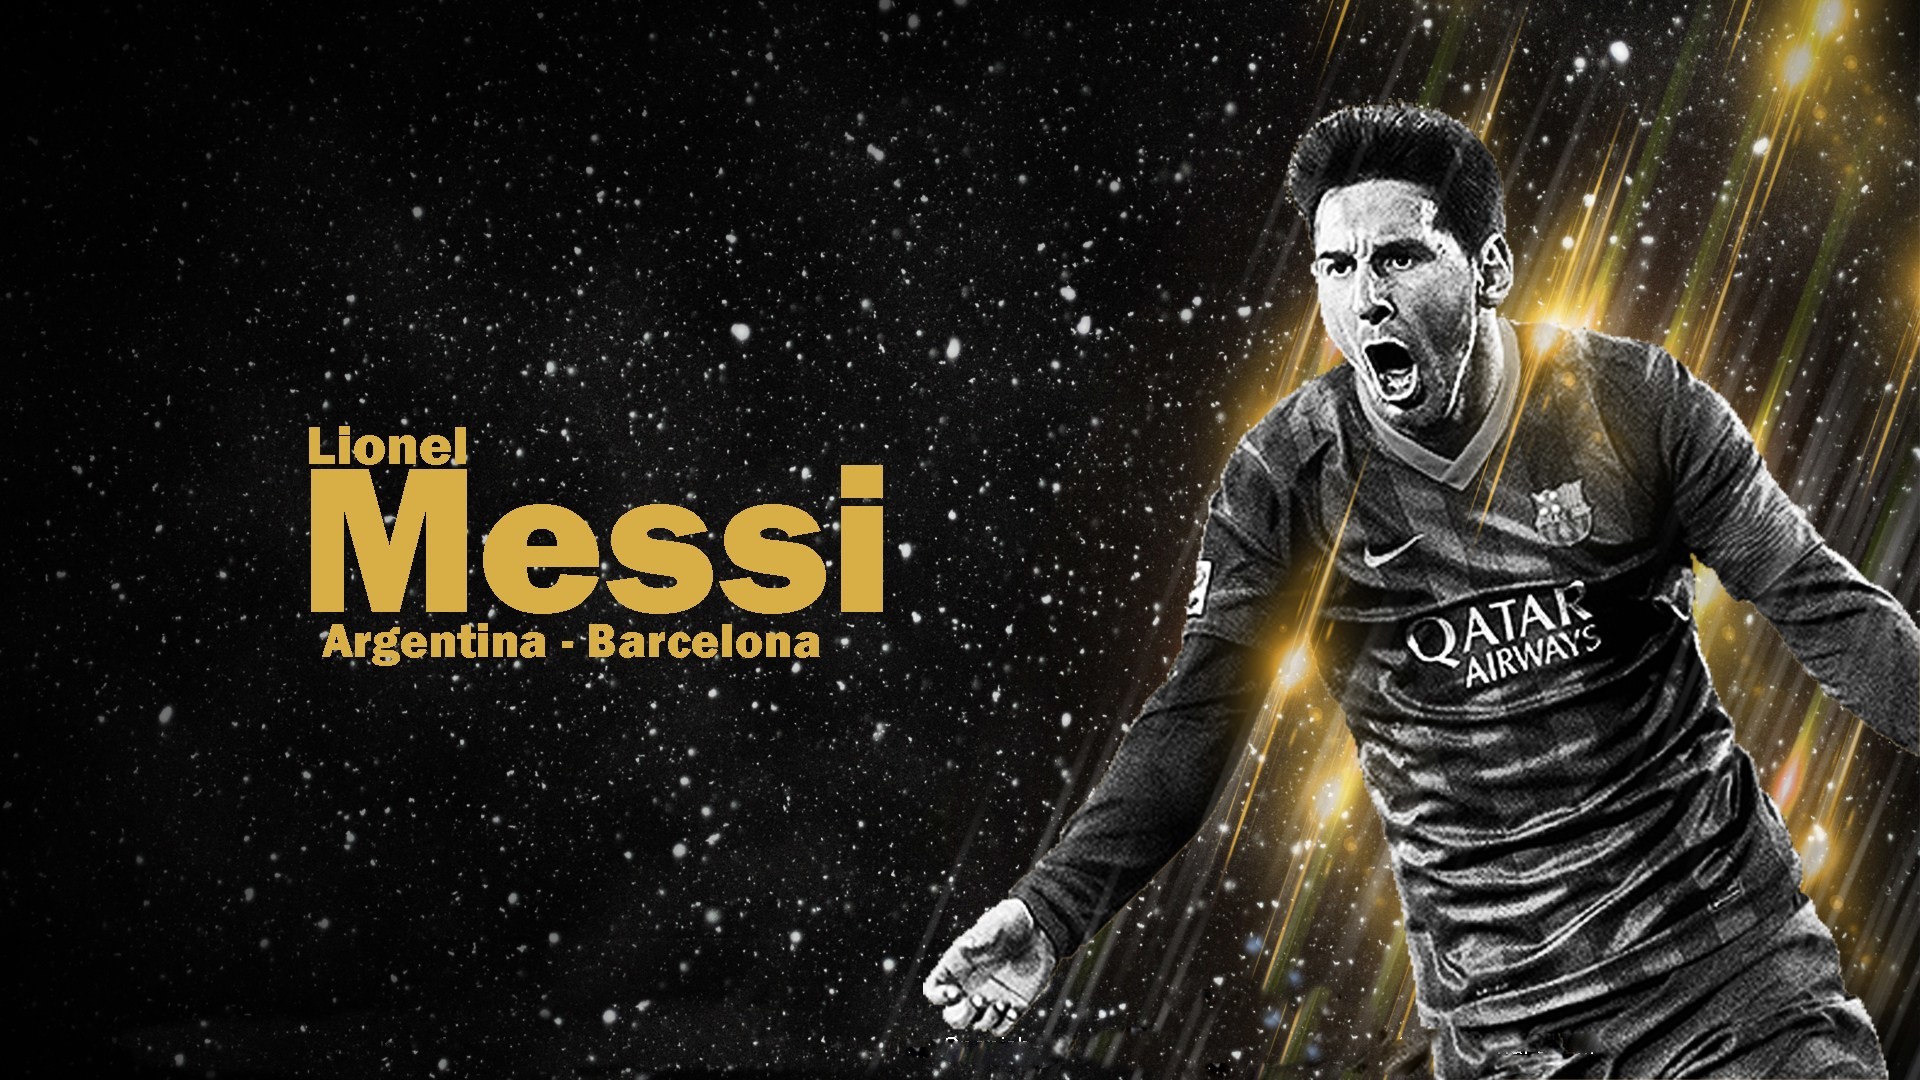 1920x1080 Lionel Messi barcelona Wallpaper. Messi hd photos